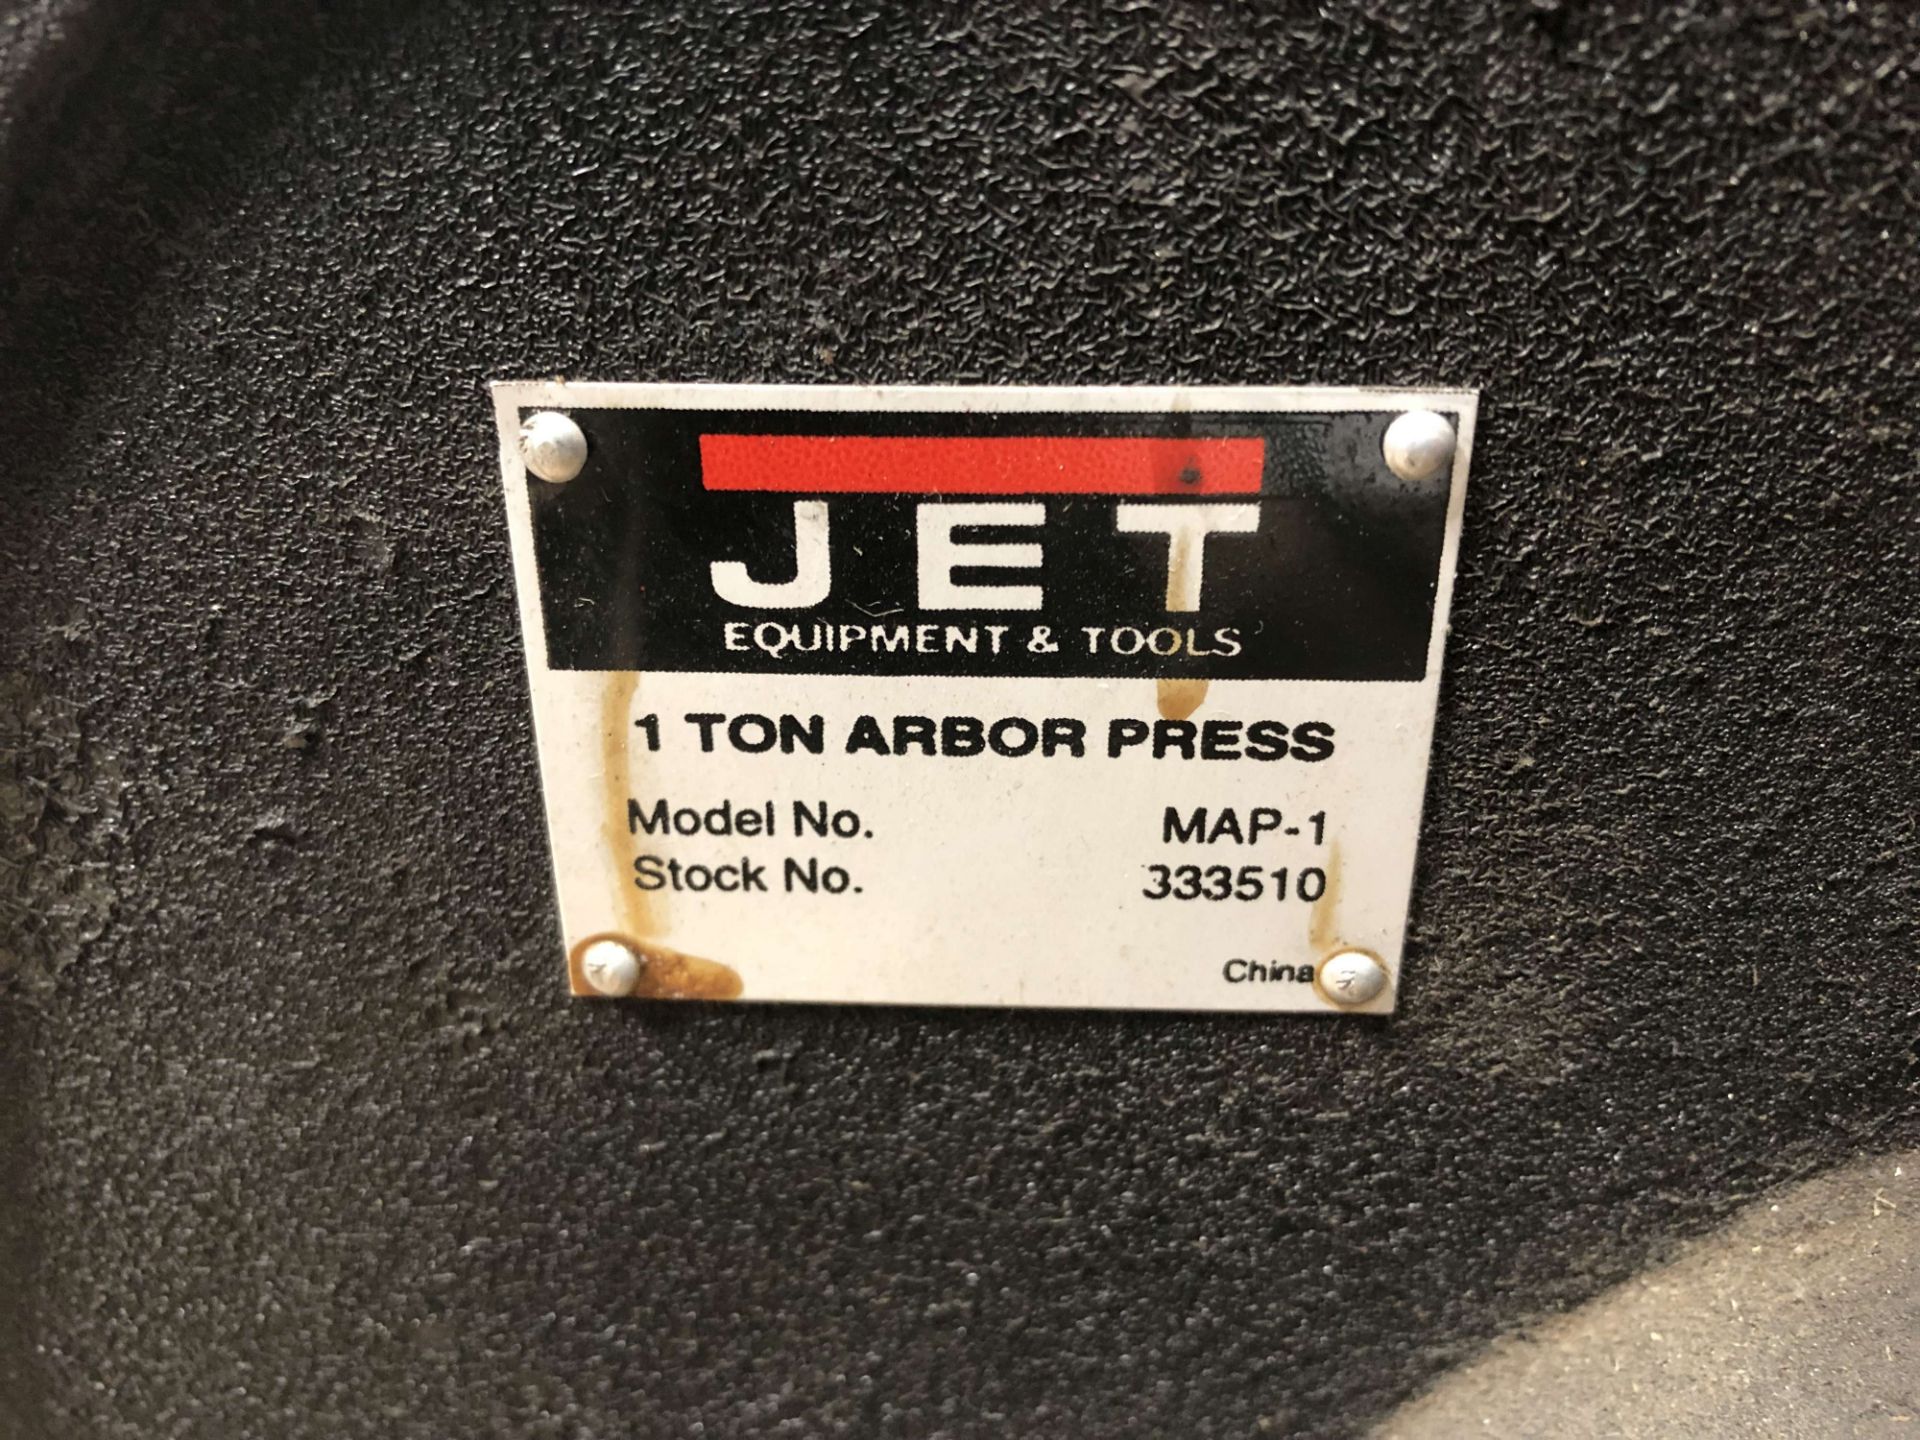 Jet 1 Ton Arbor Press, Model MAP-1, Stock No. 333510 - Image 3 of 3